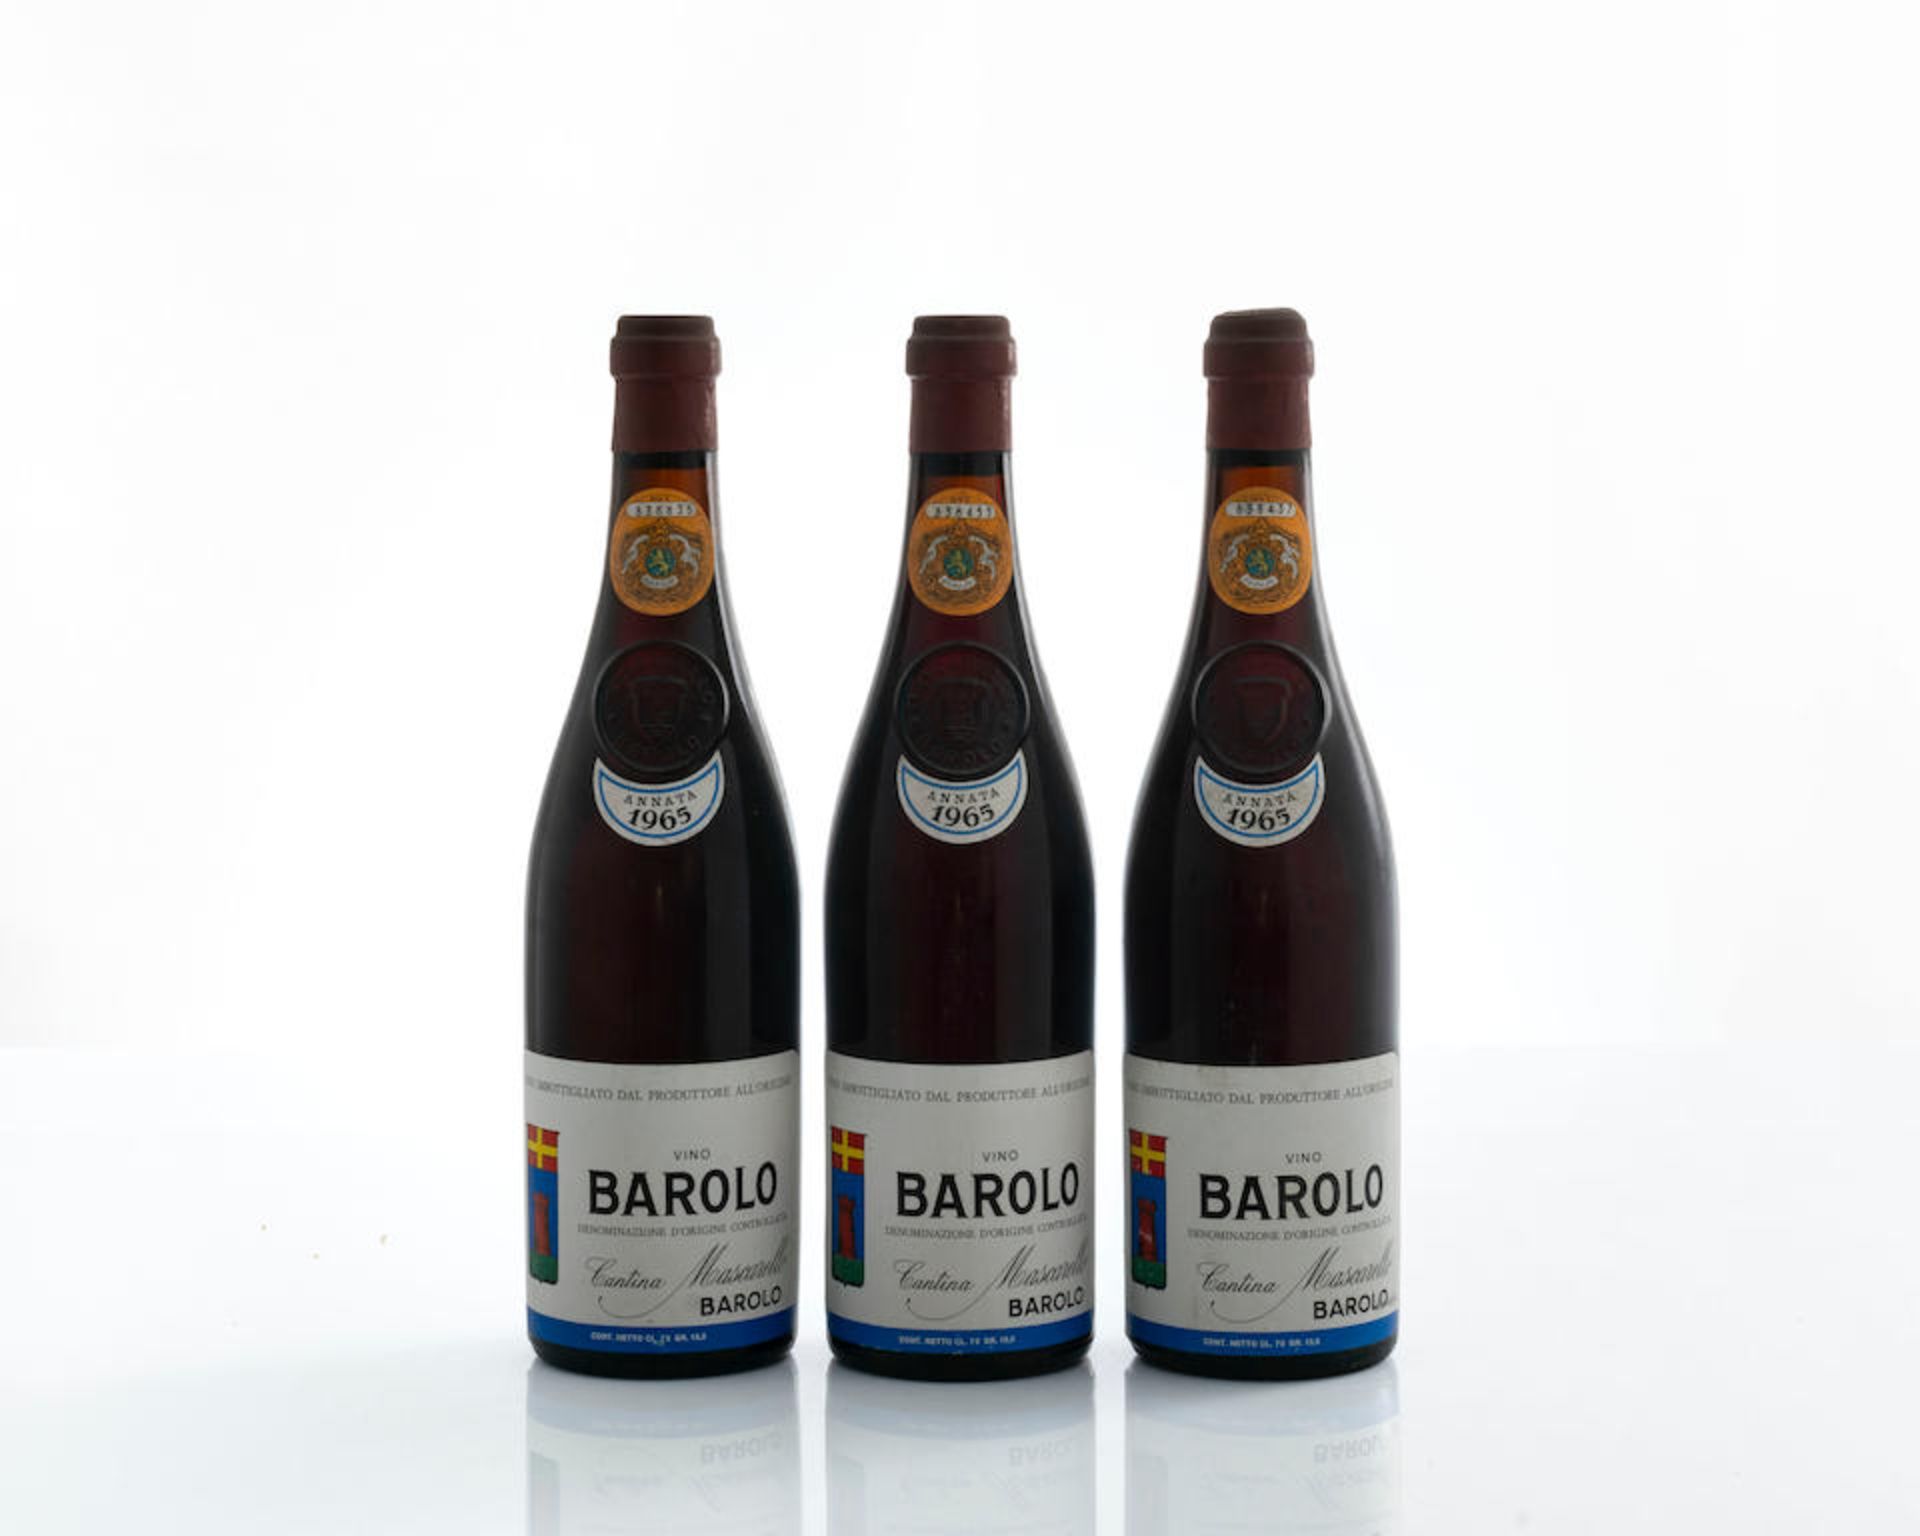 Barolo 1965, Bartolo Mascarello (3)